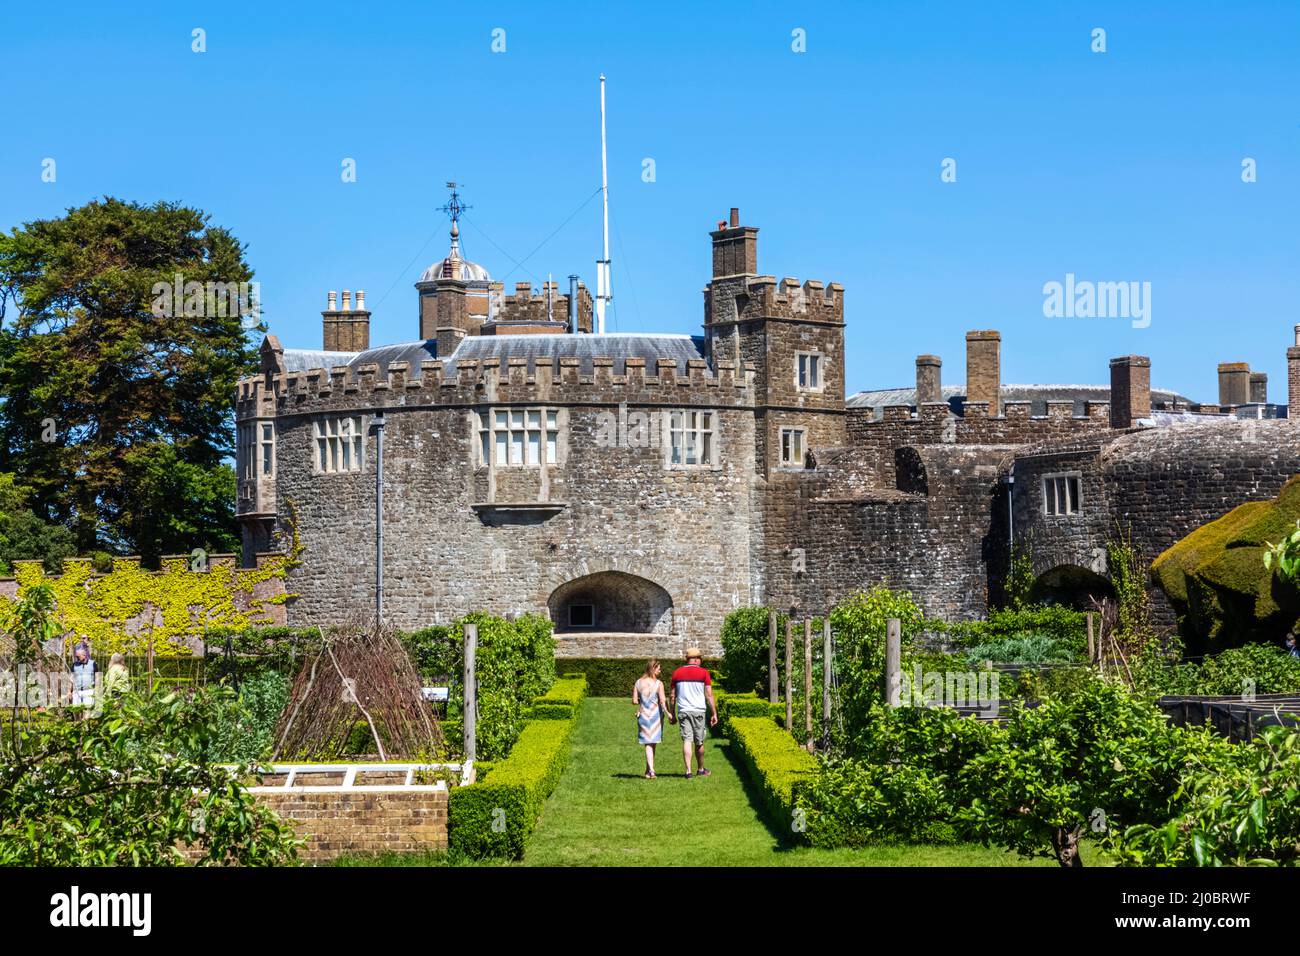 Angleterre, Kent, Walmer, château de Walmer, le jardin de la cuisine Banque D'Images